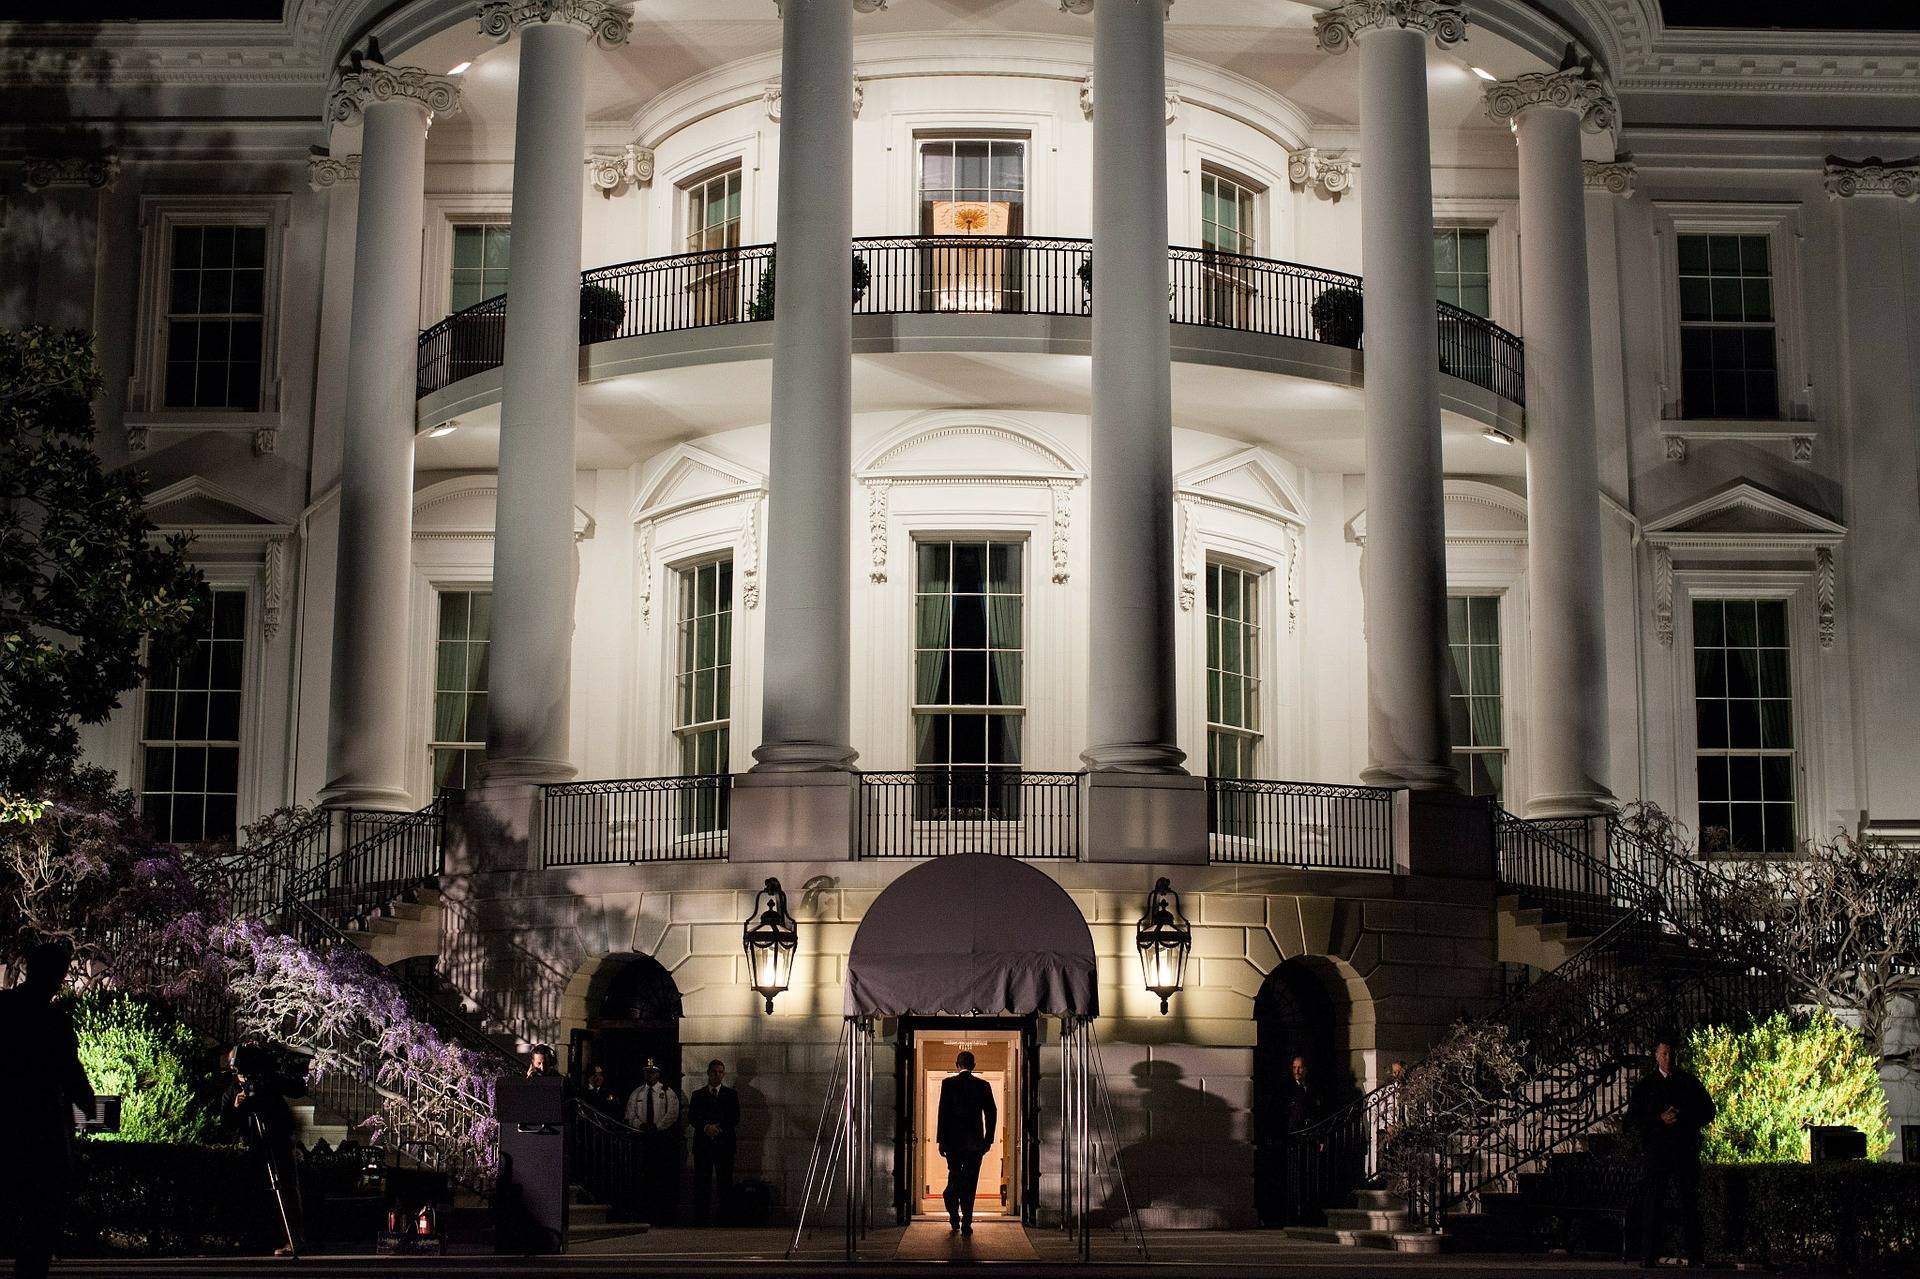 President Obama at the White House, Washington D.C.